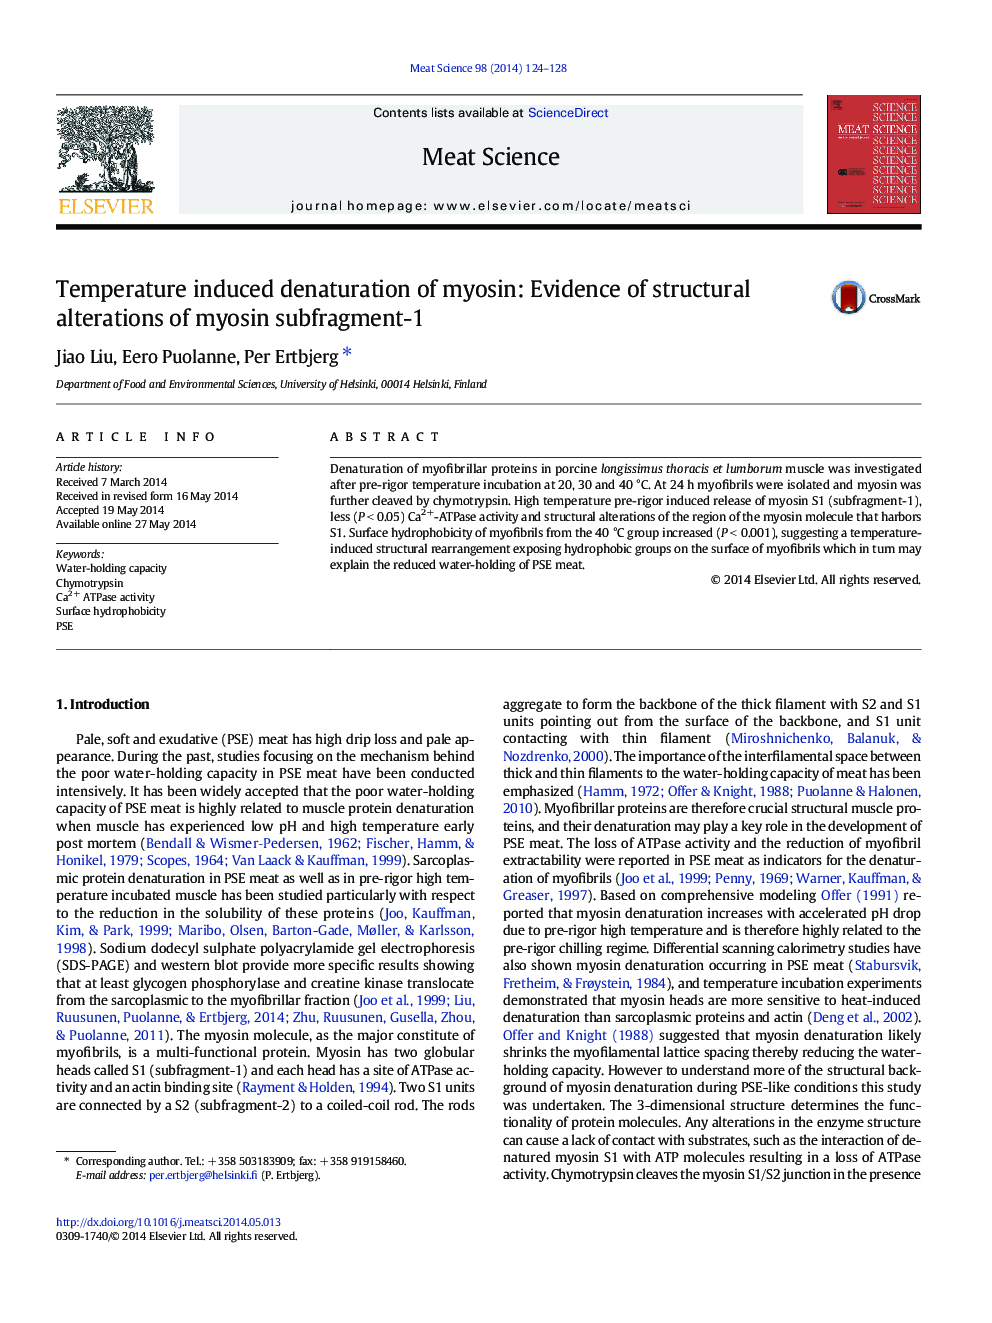 Temperature induced denaturation of myosin: Evidence of structural alterations of myosin subfragment-1